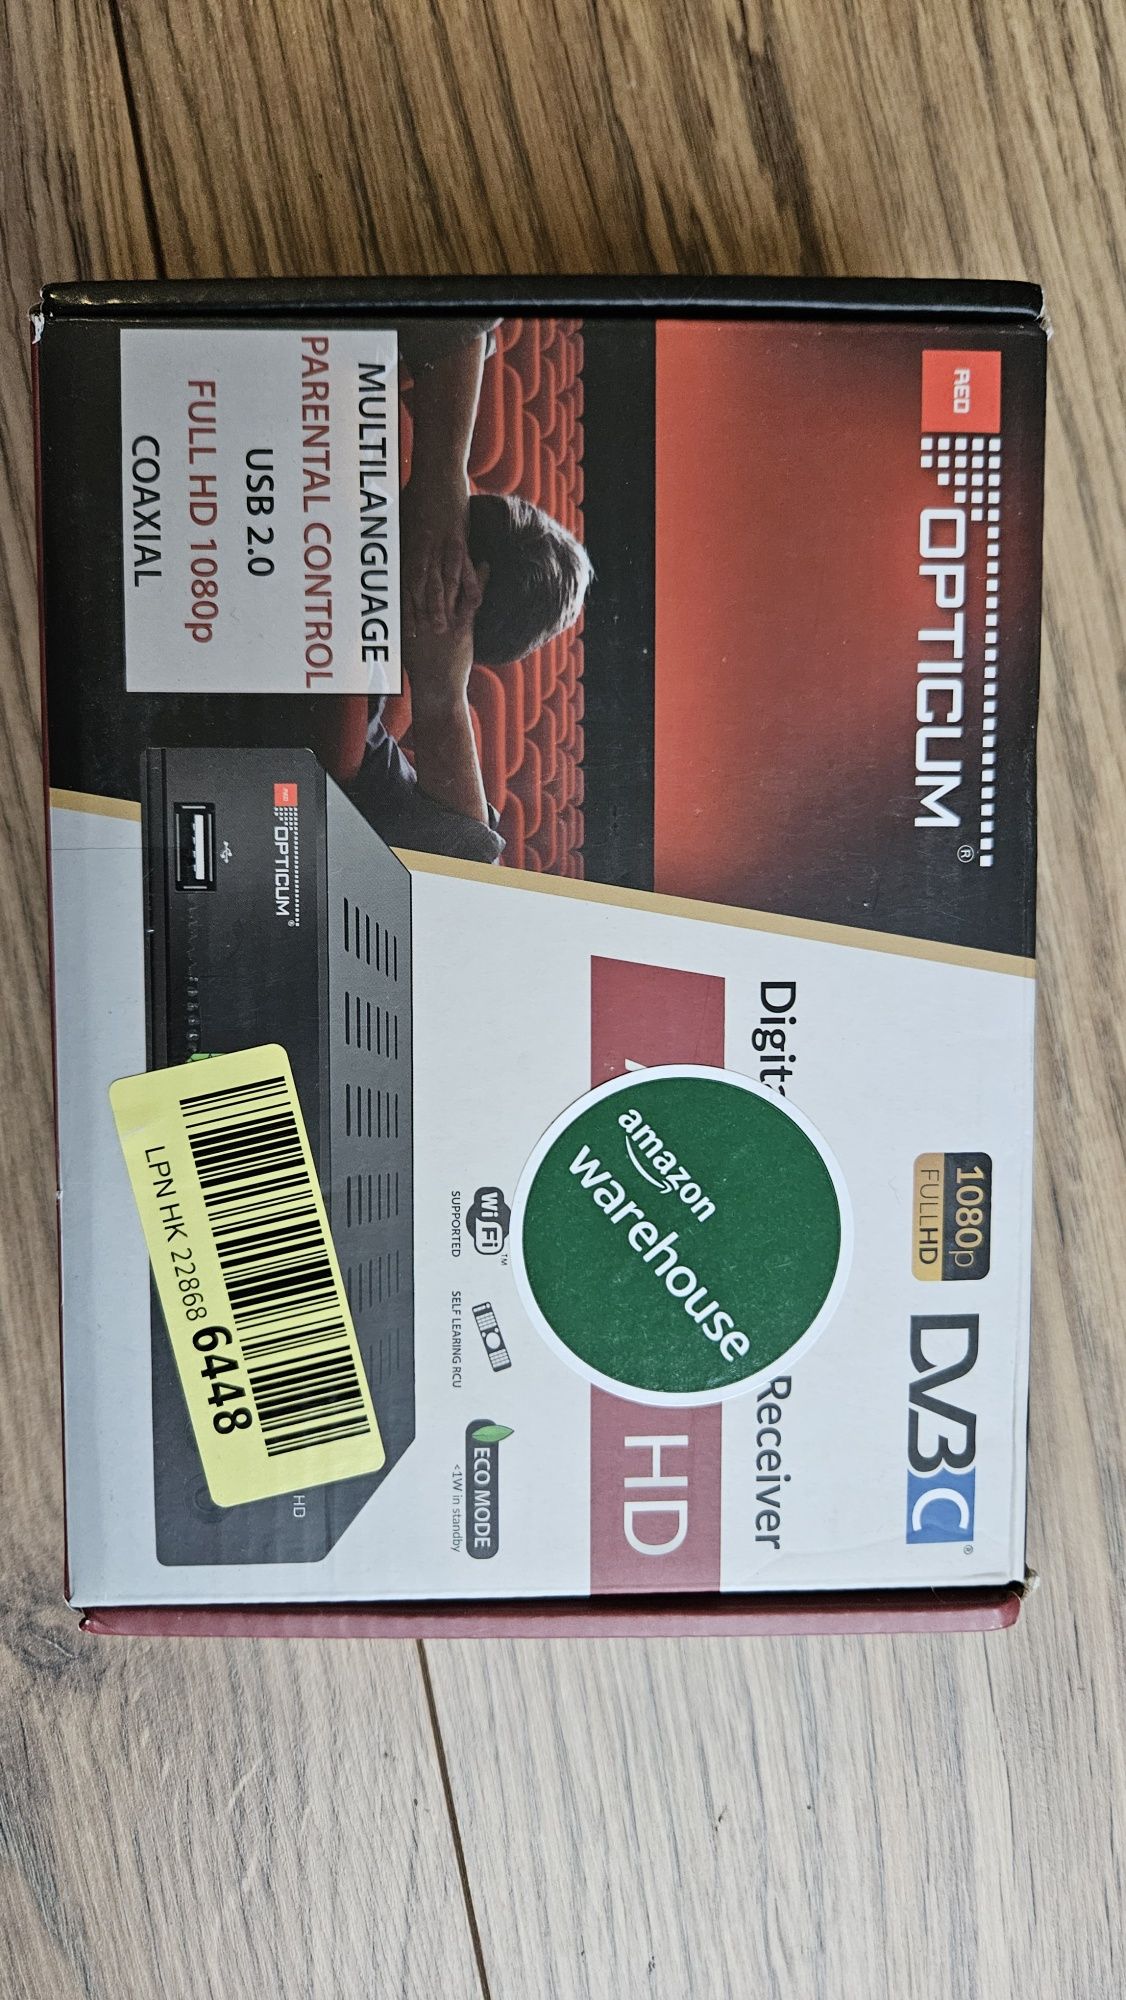 Dekoder Opticum DVBC AX C100 HD